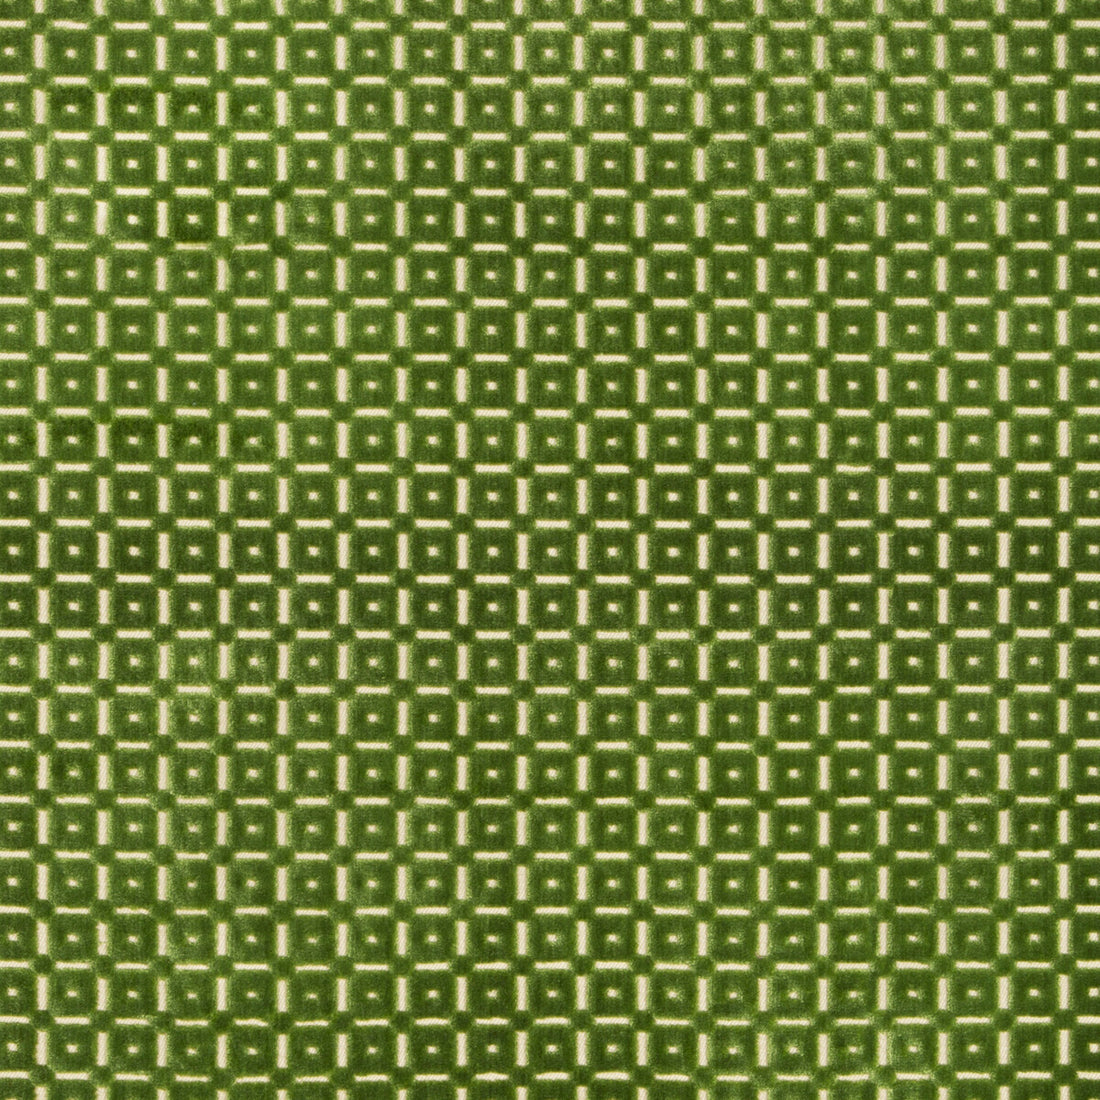 Savanne Velvet fabric in leaf color - pattern 8018110.3.0 - by Brunschwig &amp; Fils in the Cevennes collection